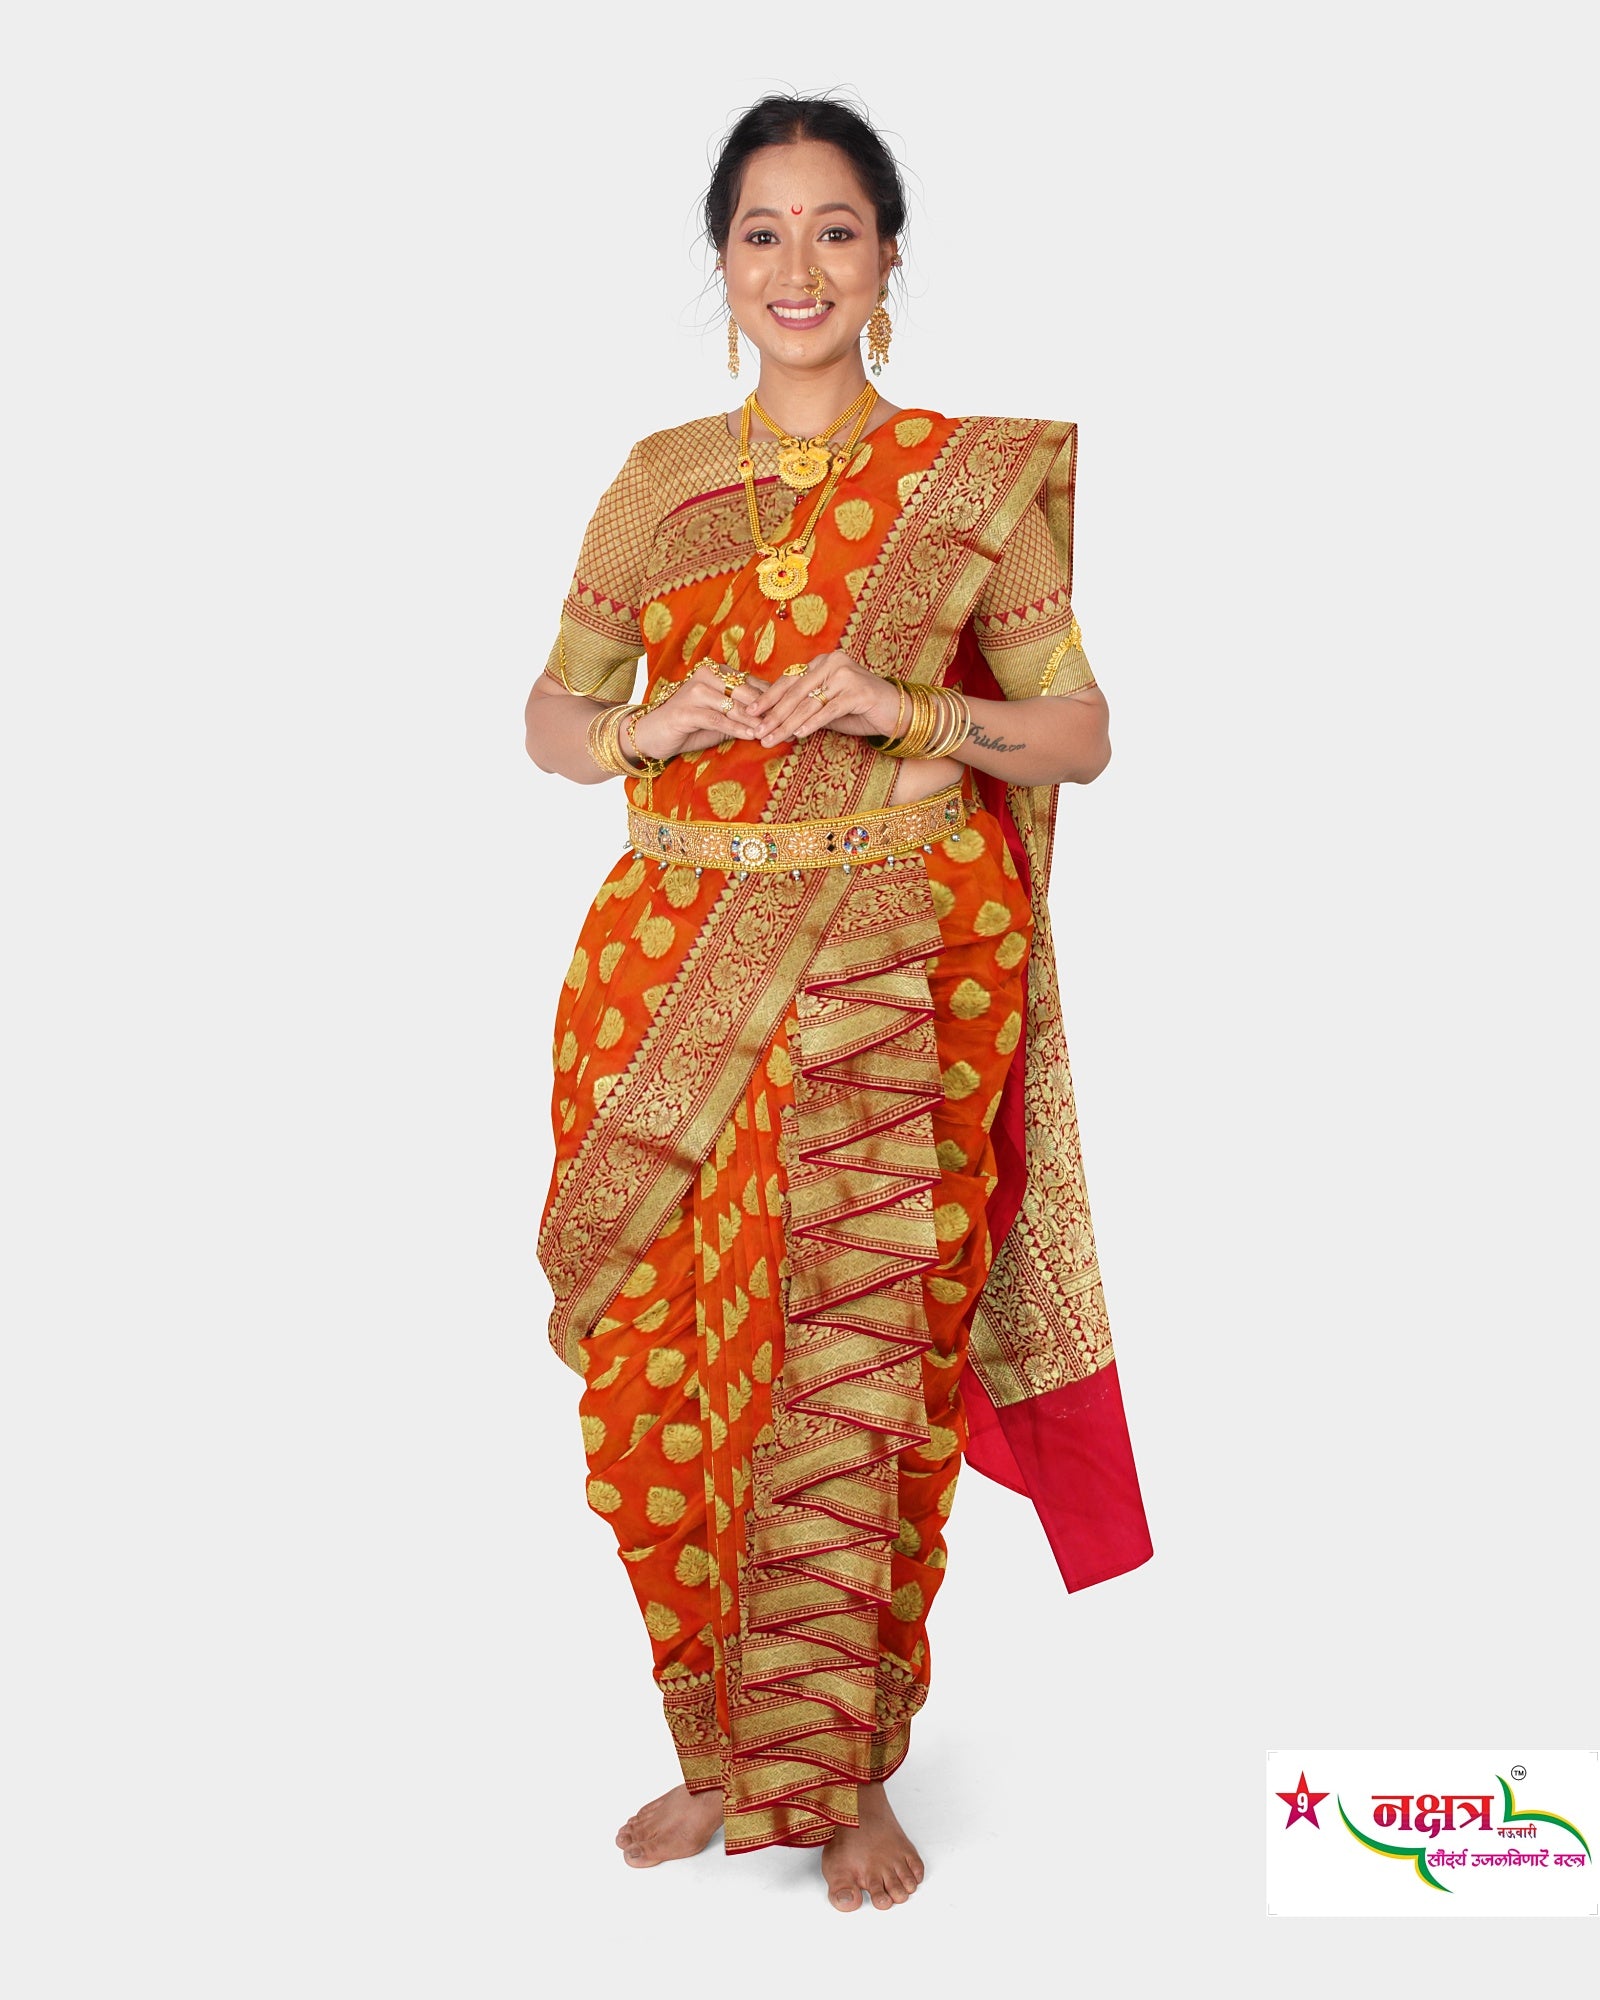 Gudi Padwa 2021: Two Simple Ways to Wear Nauvari Saree! Easy Tutorial to  Help You Drape the Traditional 9-Yard Kasta on Maharastrian New Year | 👗  LatestLY